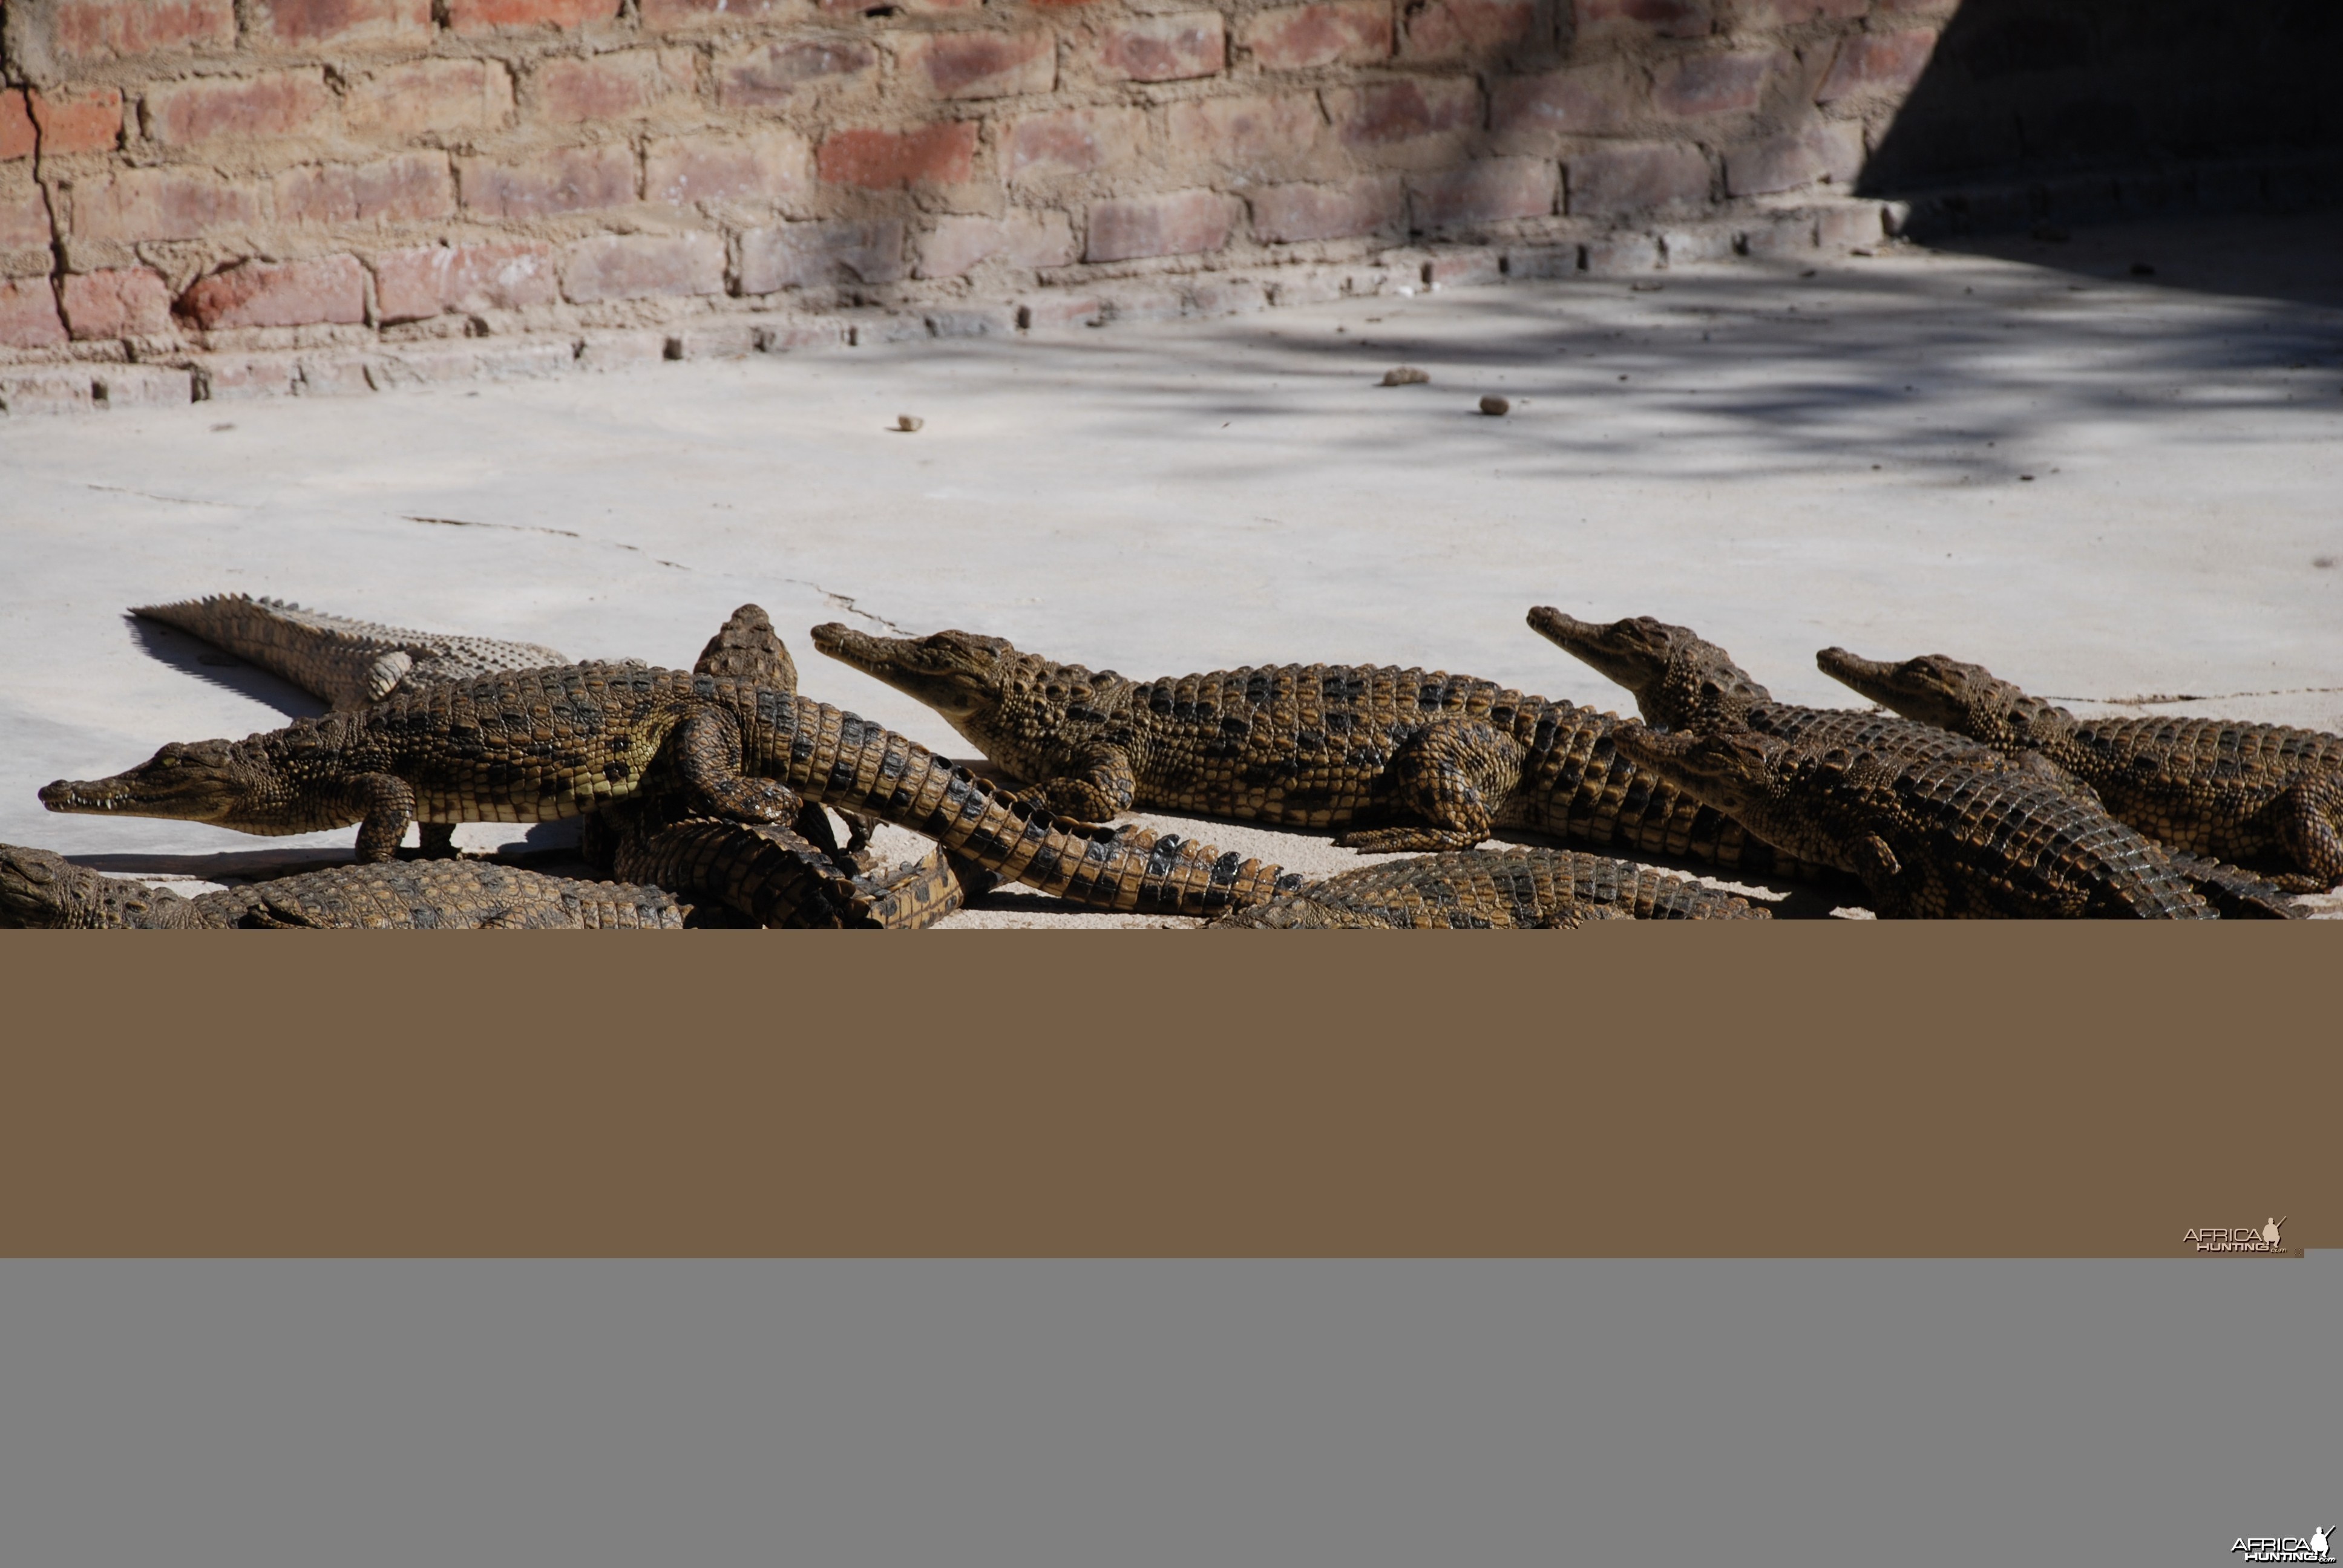 Crocs at Croc farm in Namibia